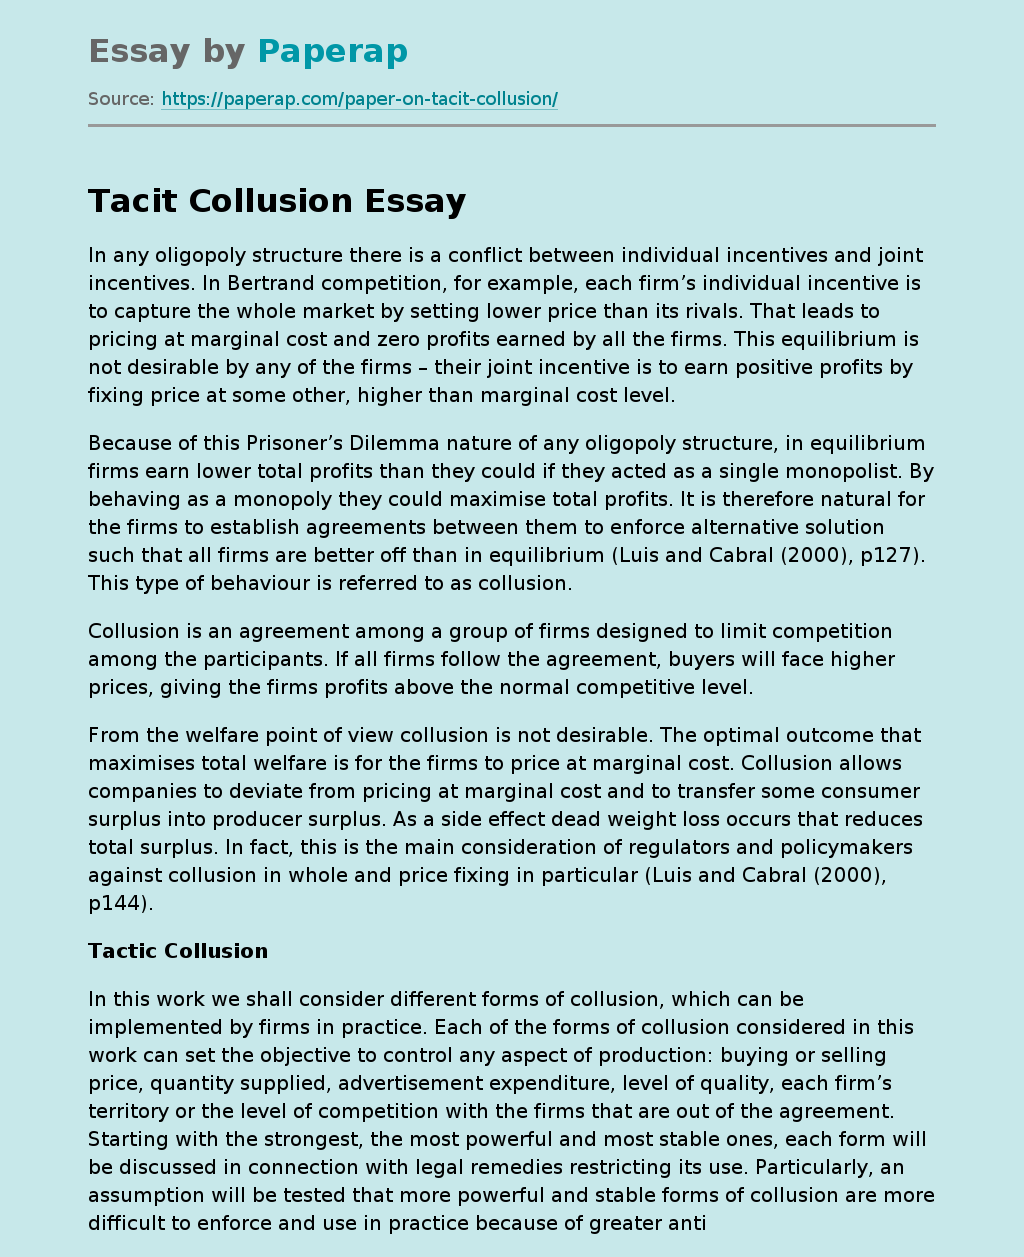 Tacit Collusion Forms of collusion